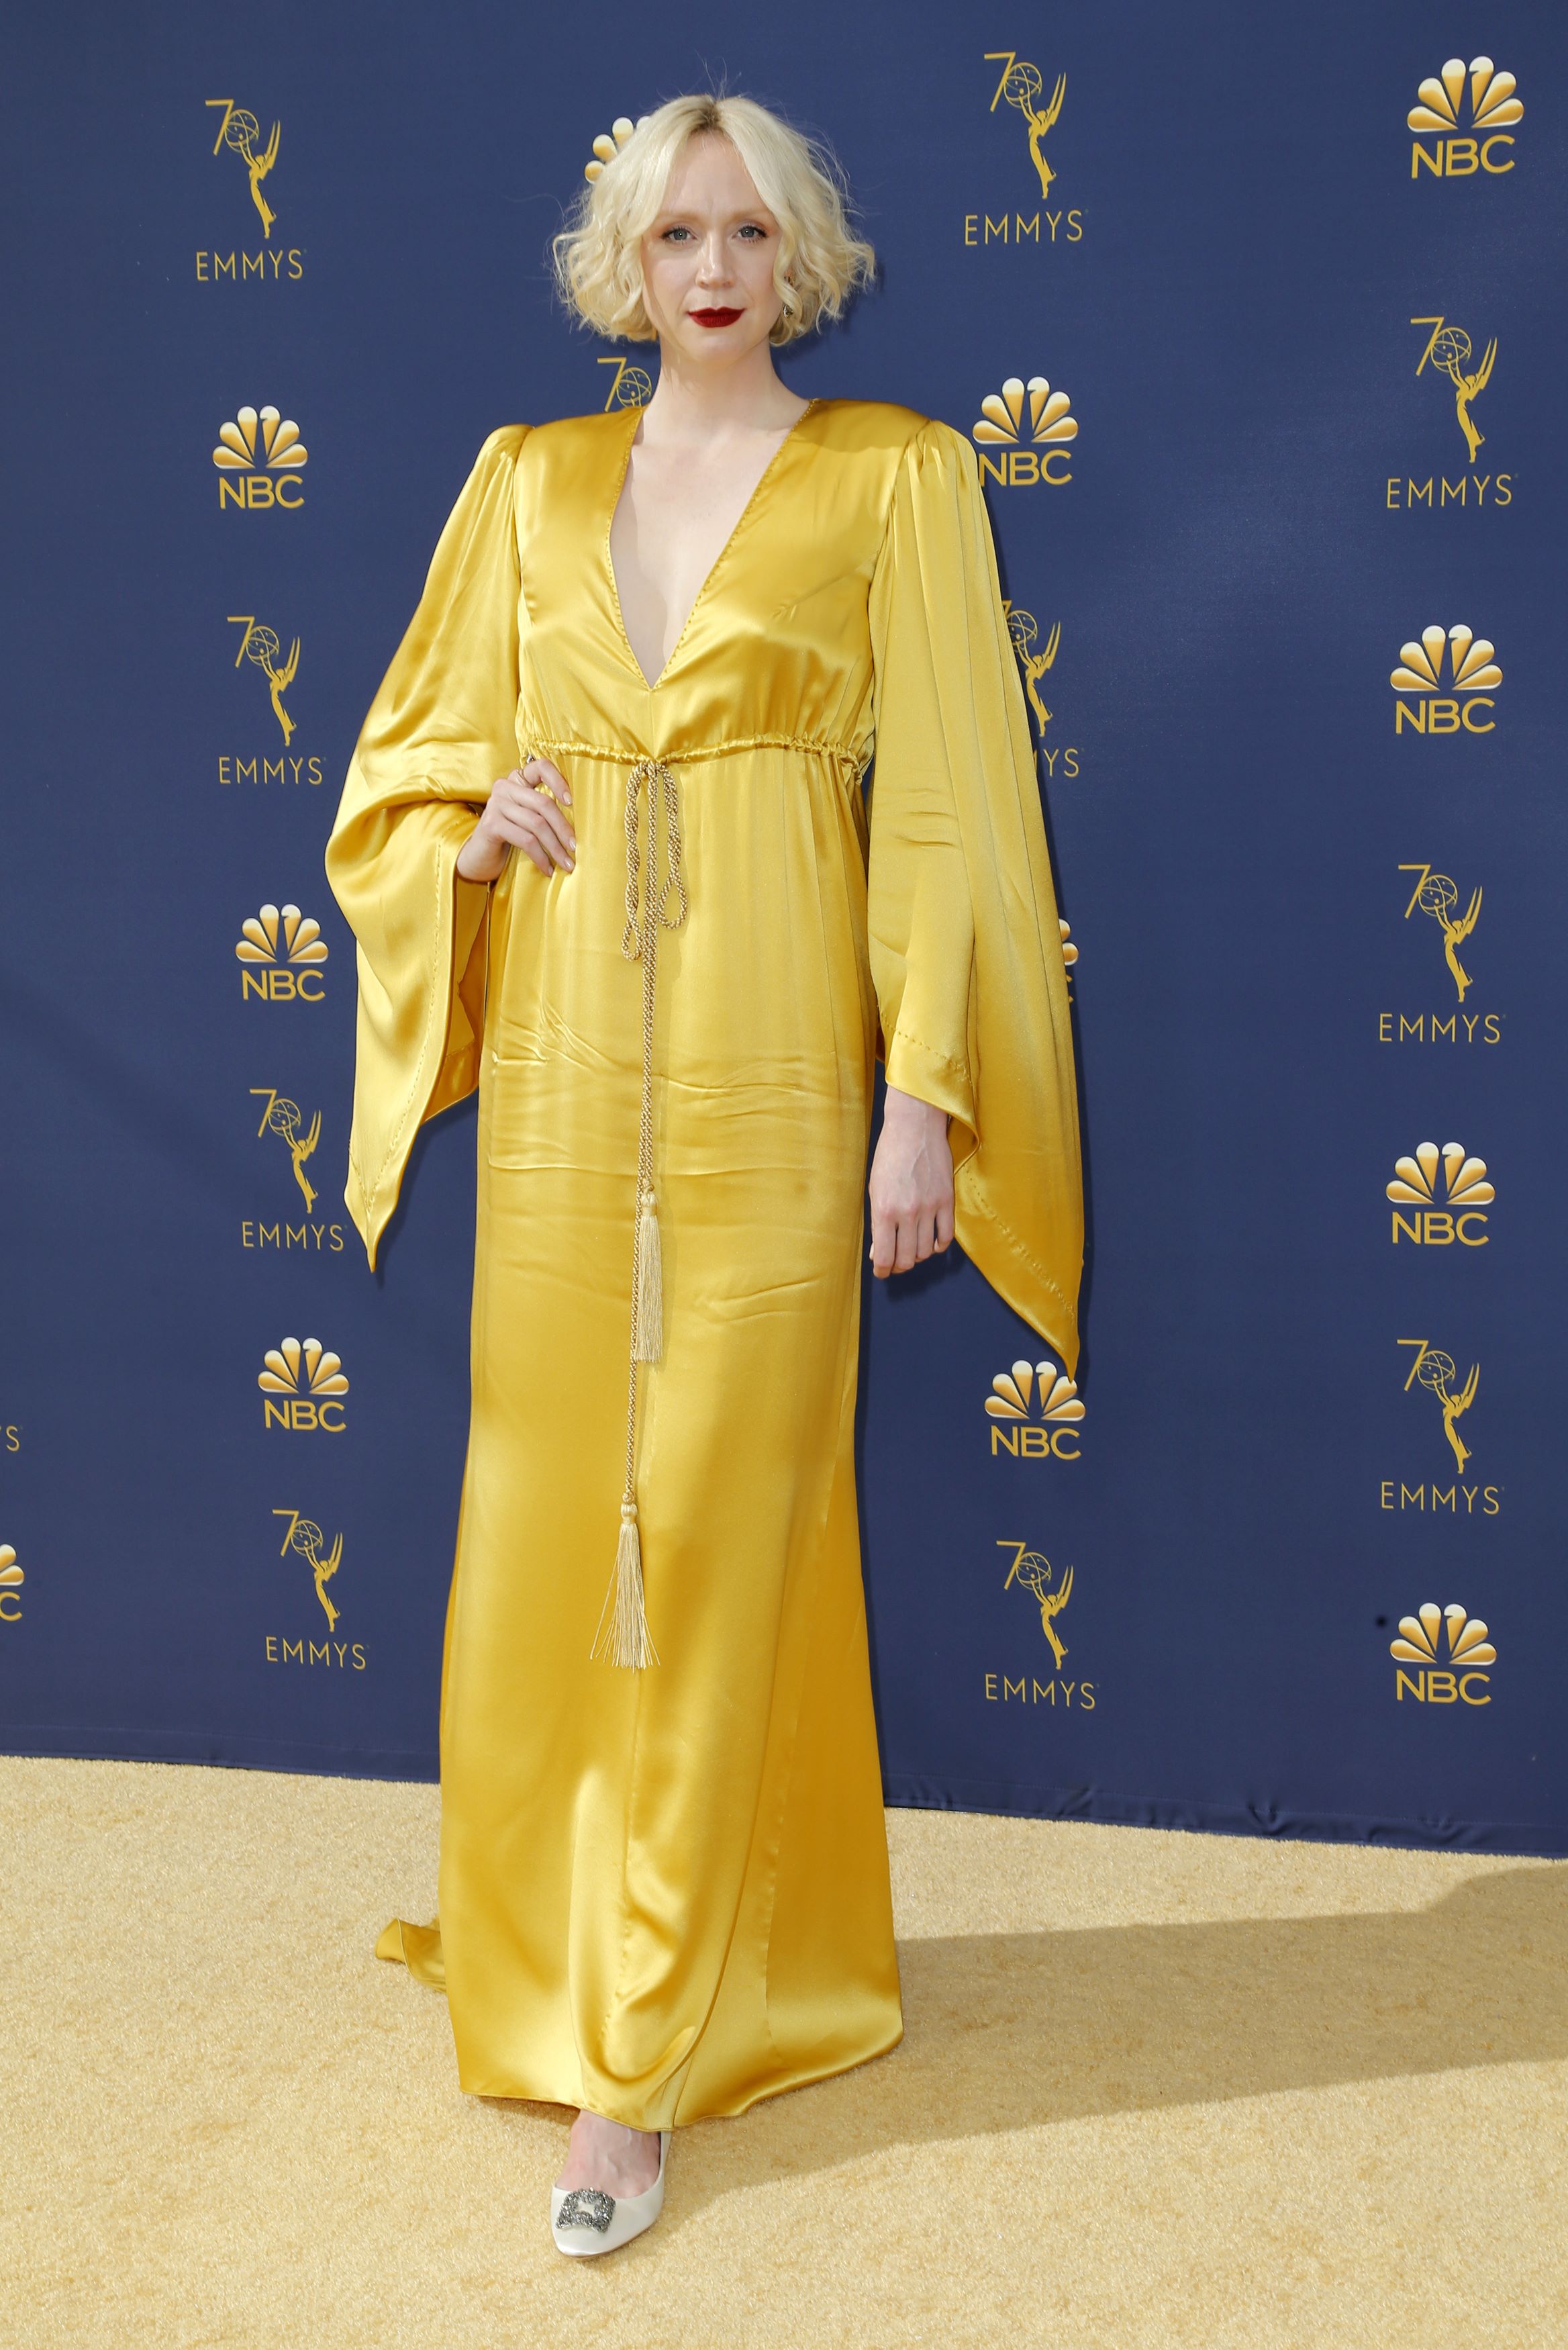 Sparkling whites, sunny yellows shine on gold carpet at TV's Emmy awards